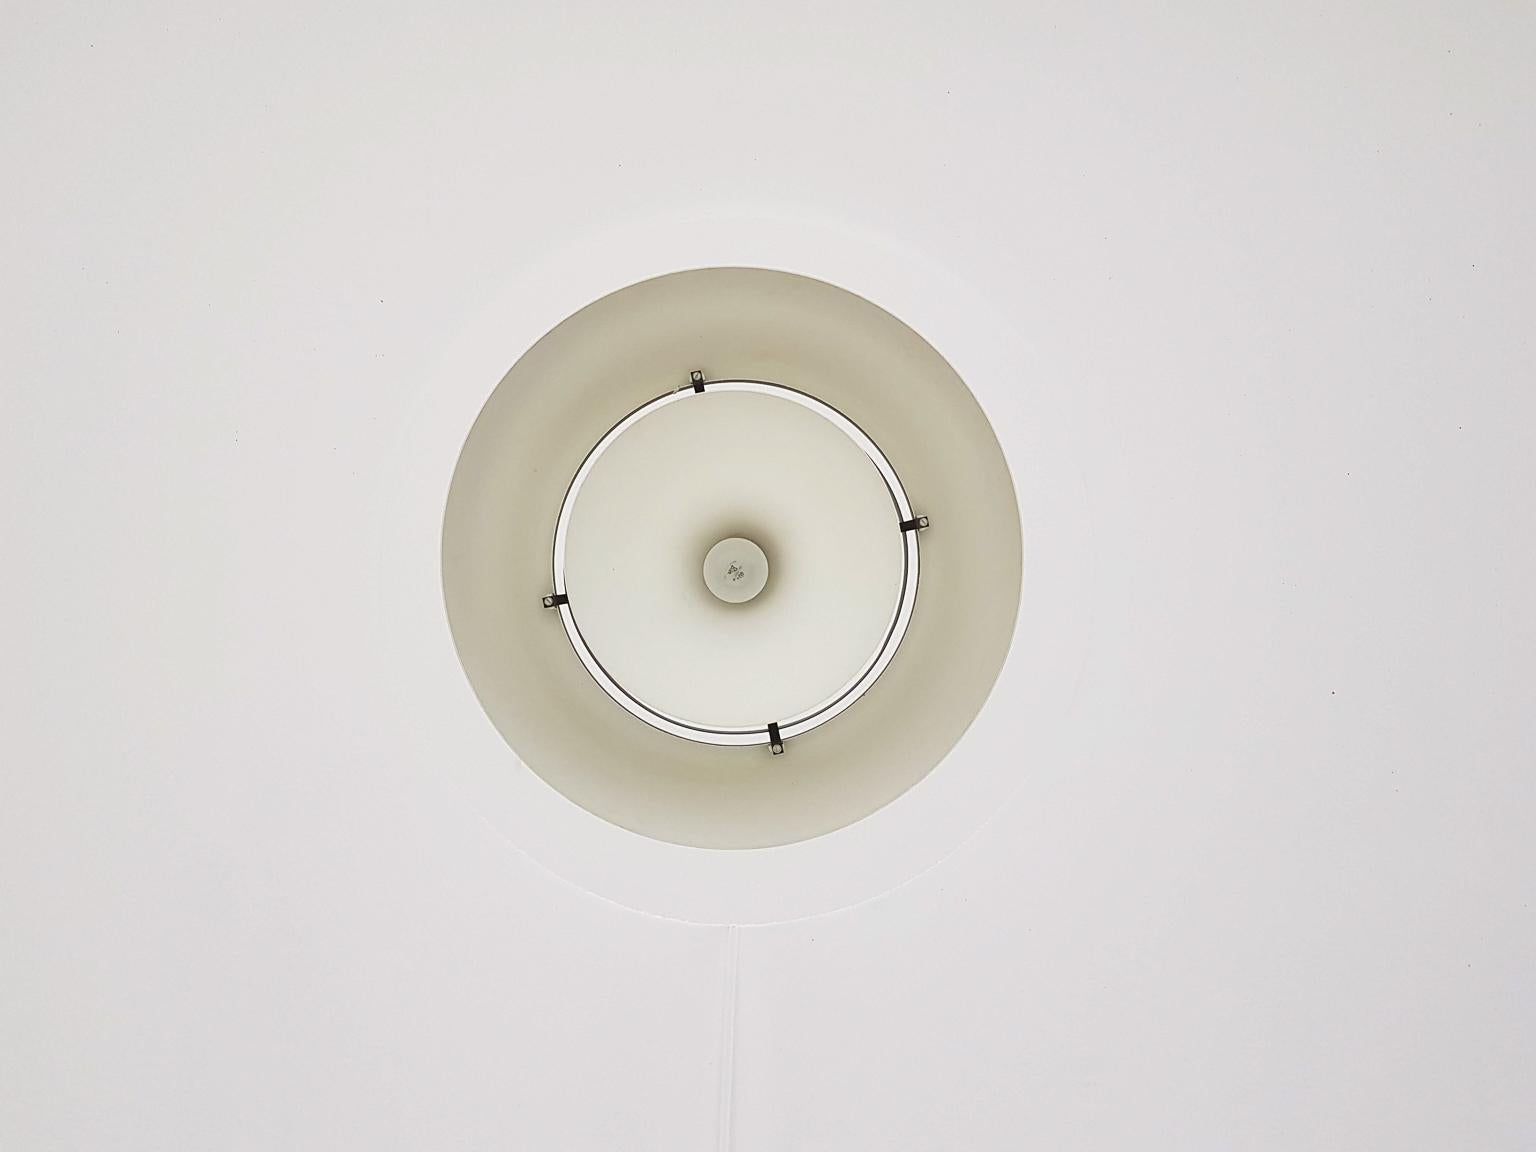 20th Century A.J. Royal Pendent Lamp by Arne Jacobsen for Louis Poulsen, Danish Design 1957